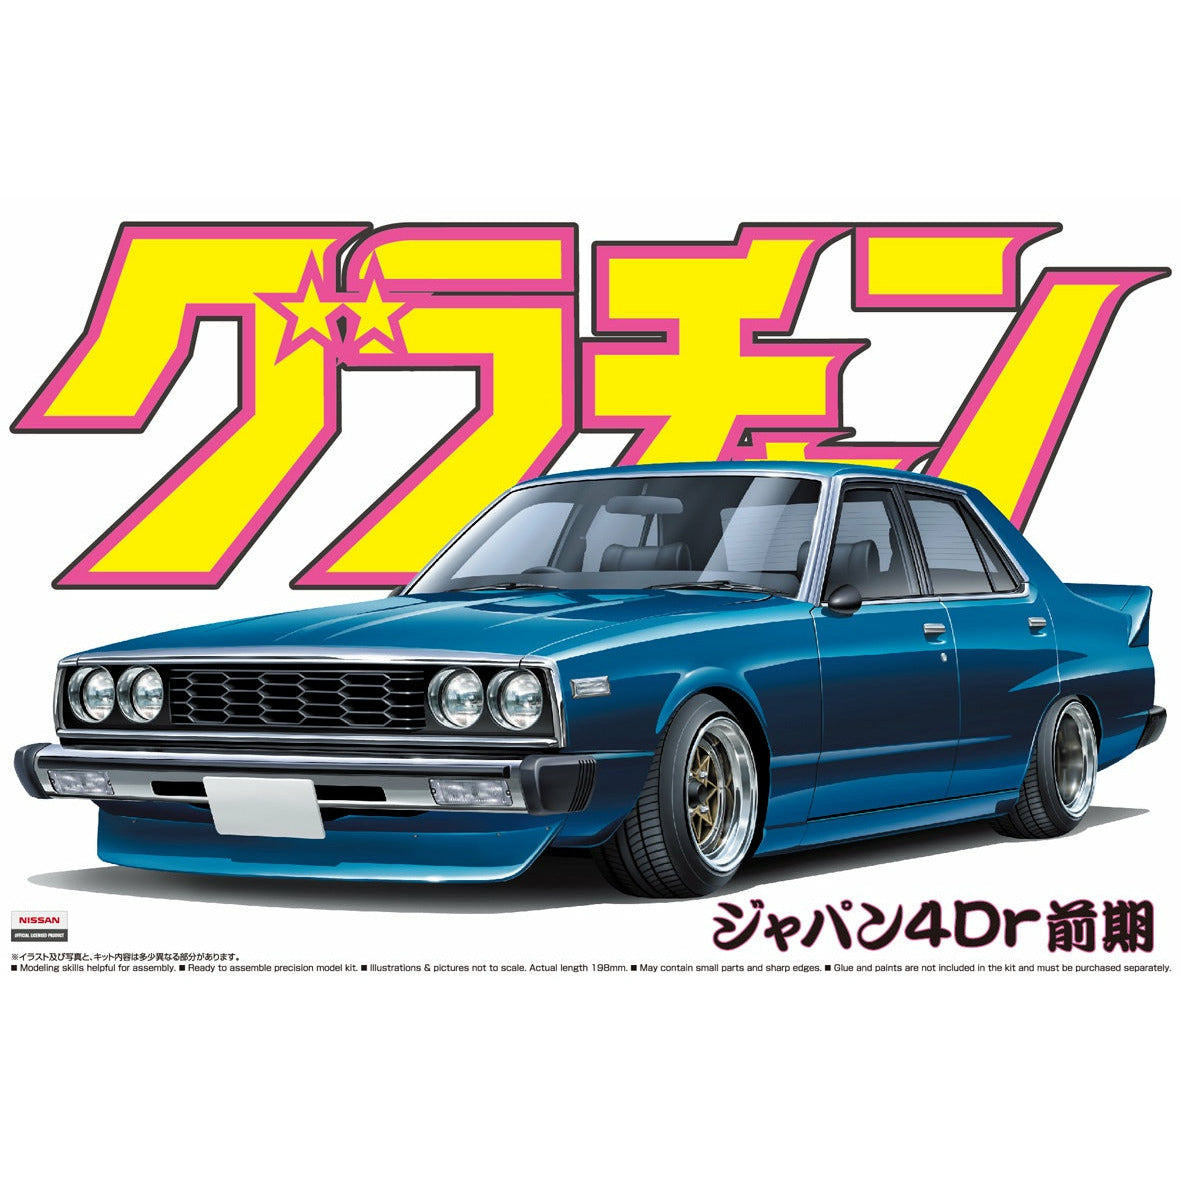 Skyline Sedan 2000GT-E/S (Nissan) 1/24 #4273 by Aoshima